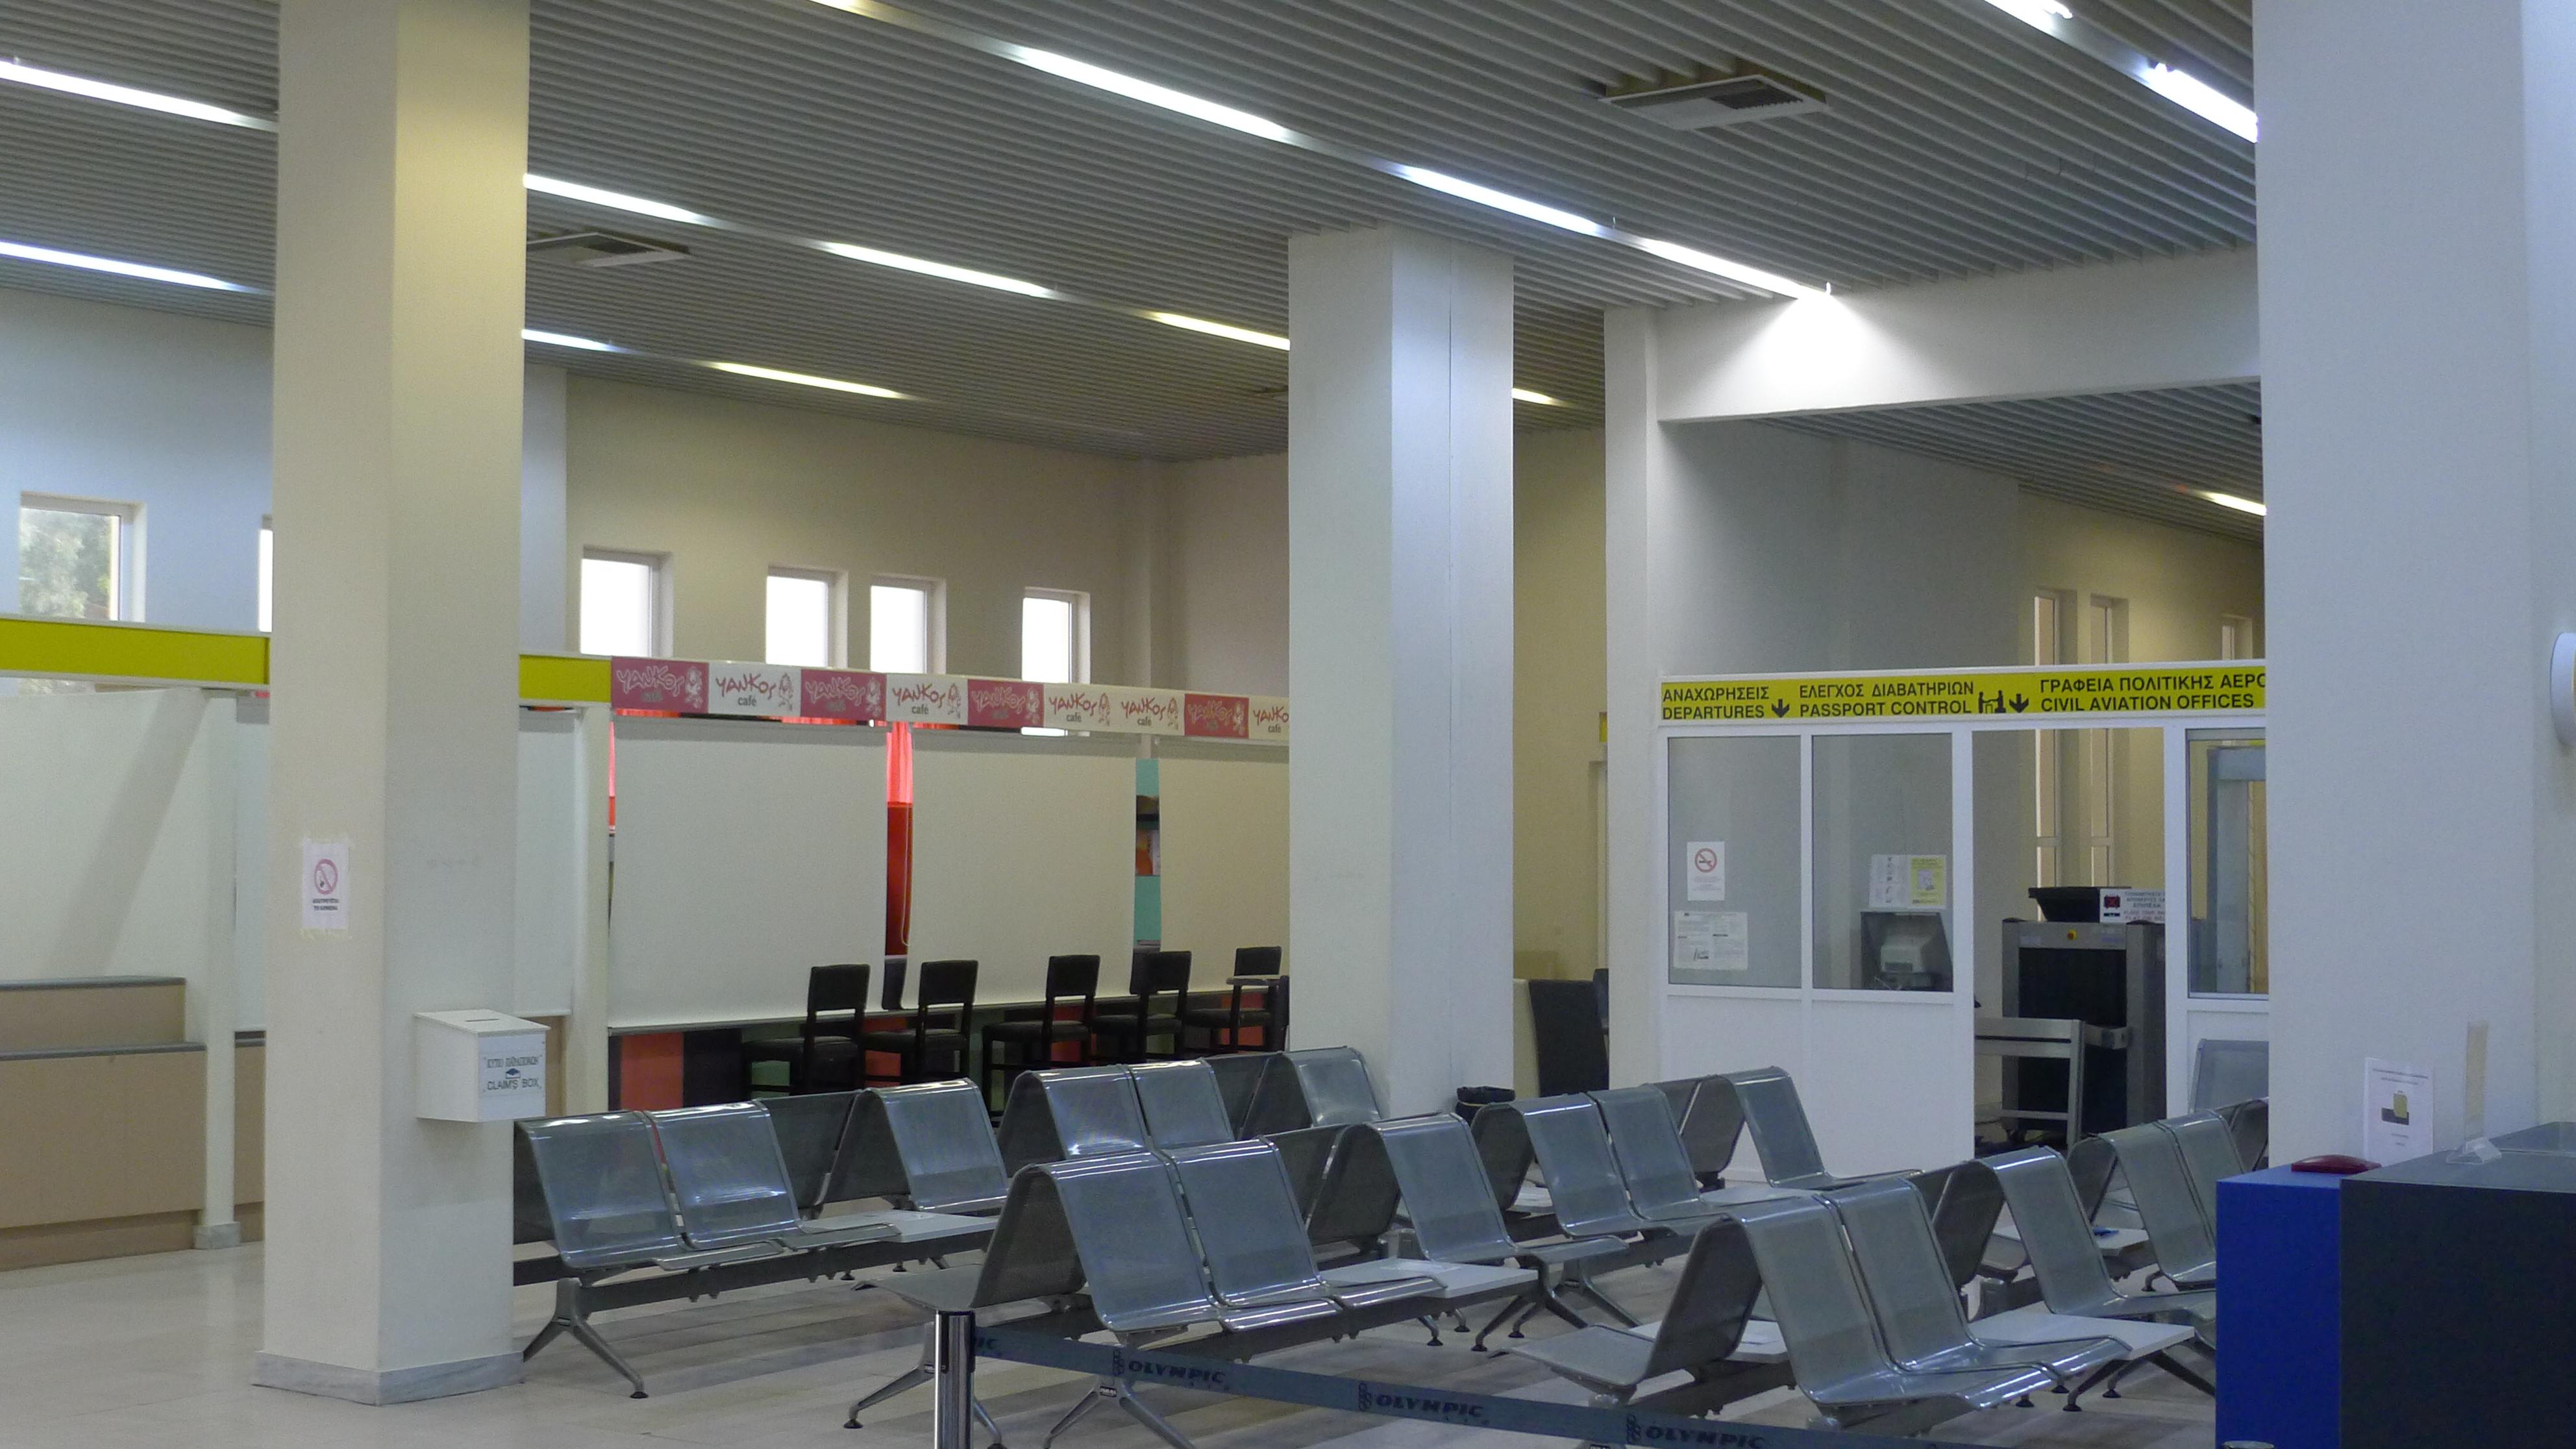 Milos airport